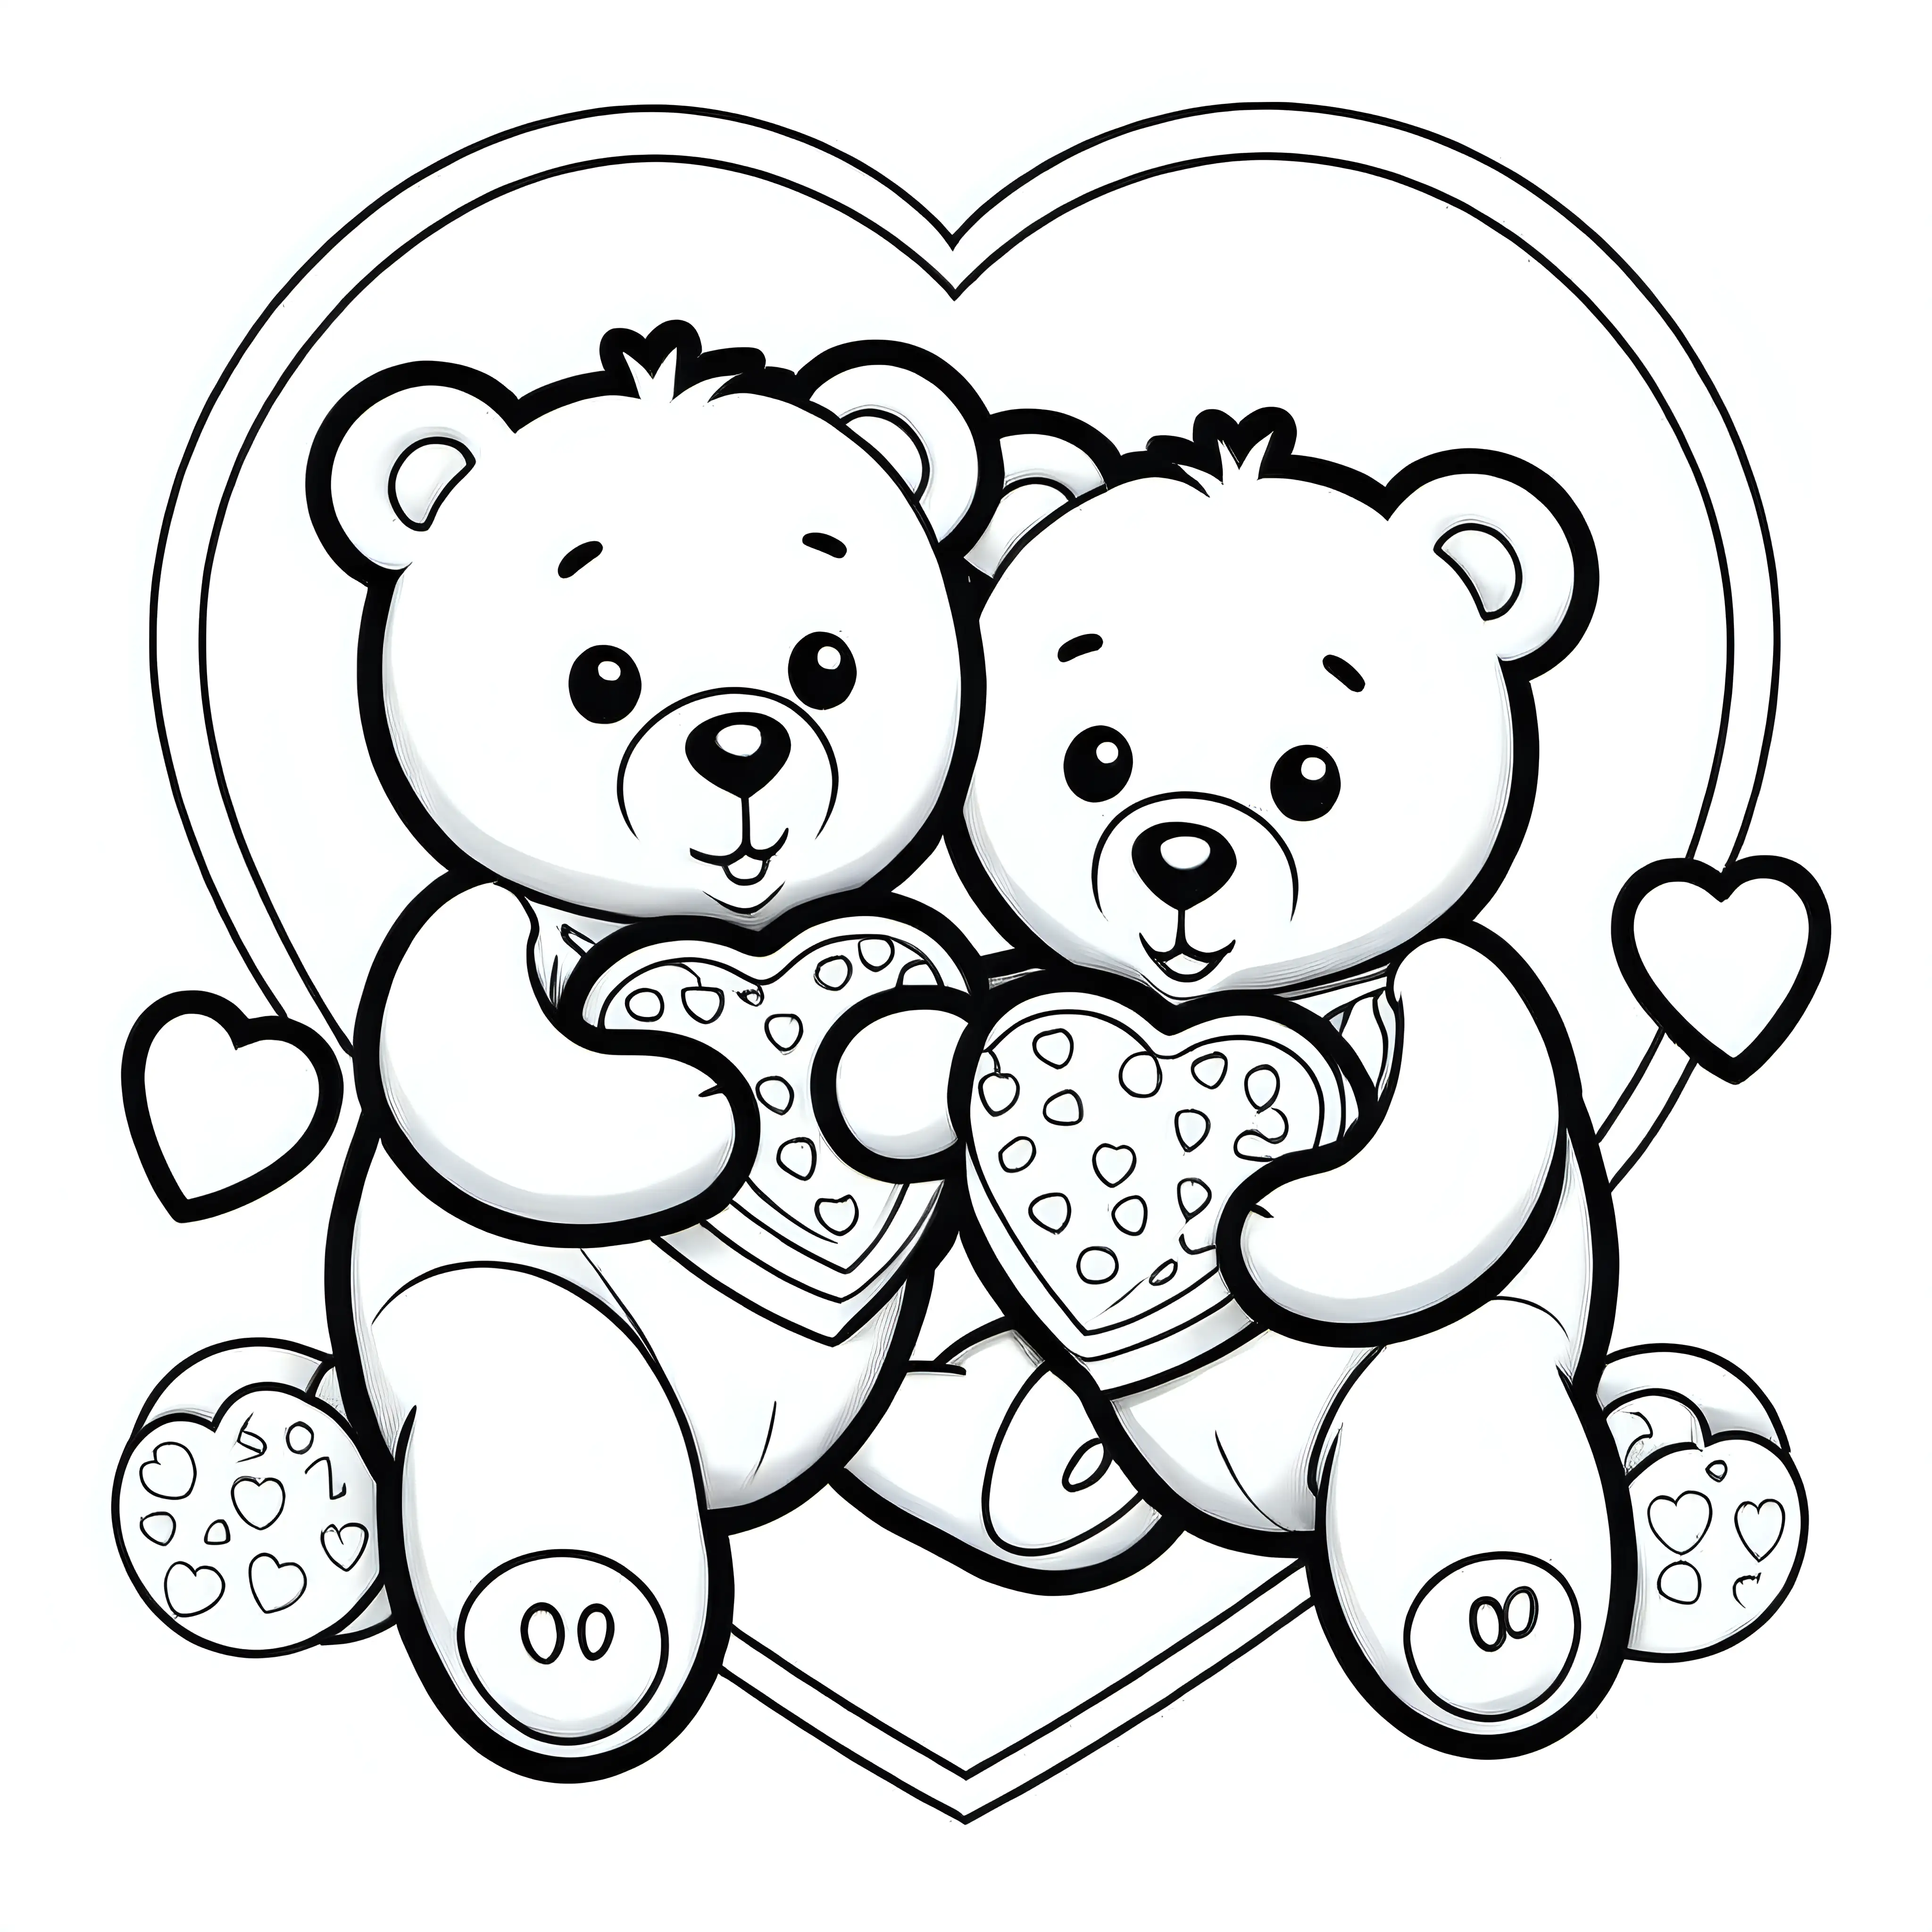 Adorable Teddy Bears Enjoying HeartShaped Cookies Coloring Page